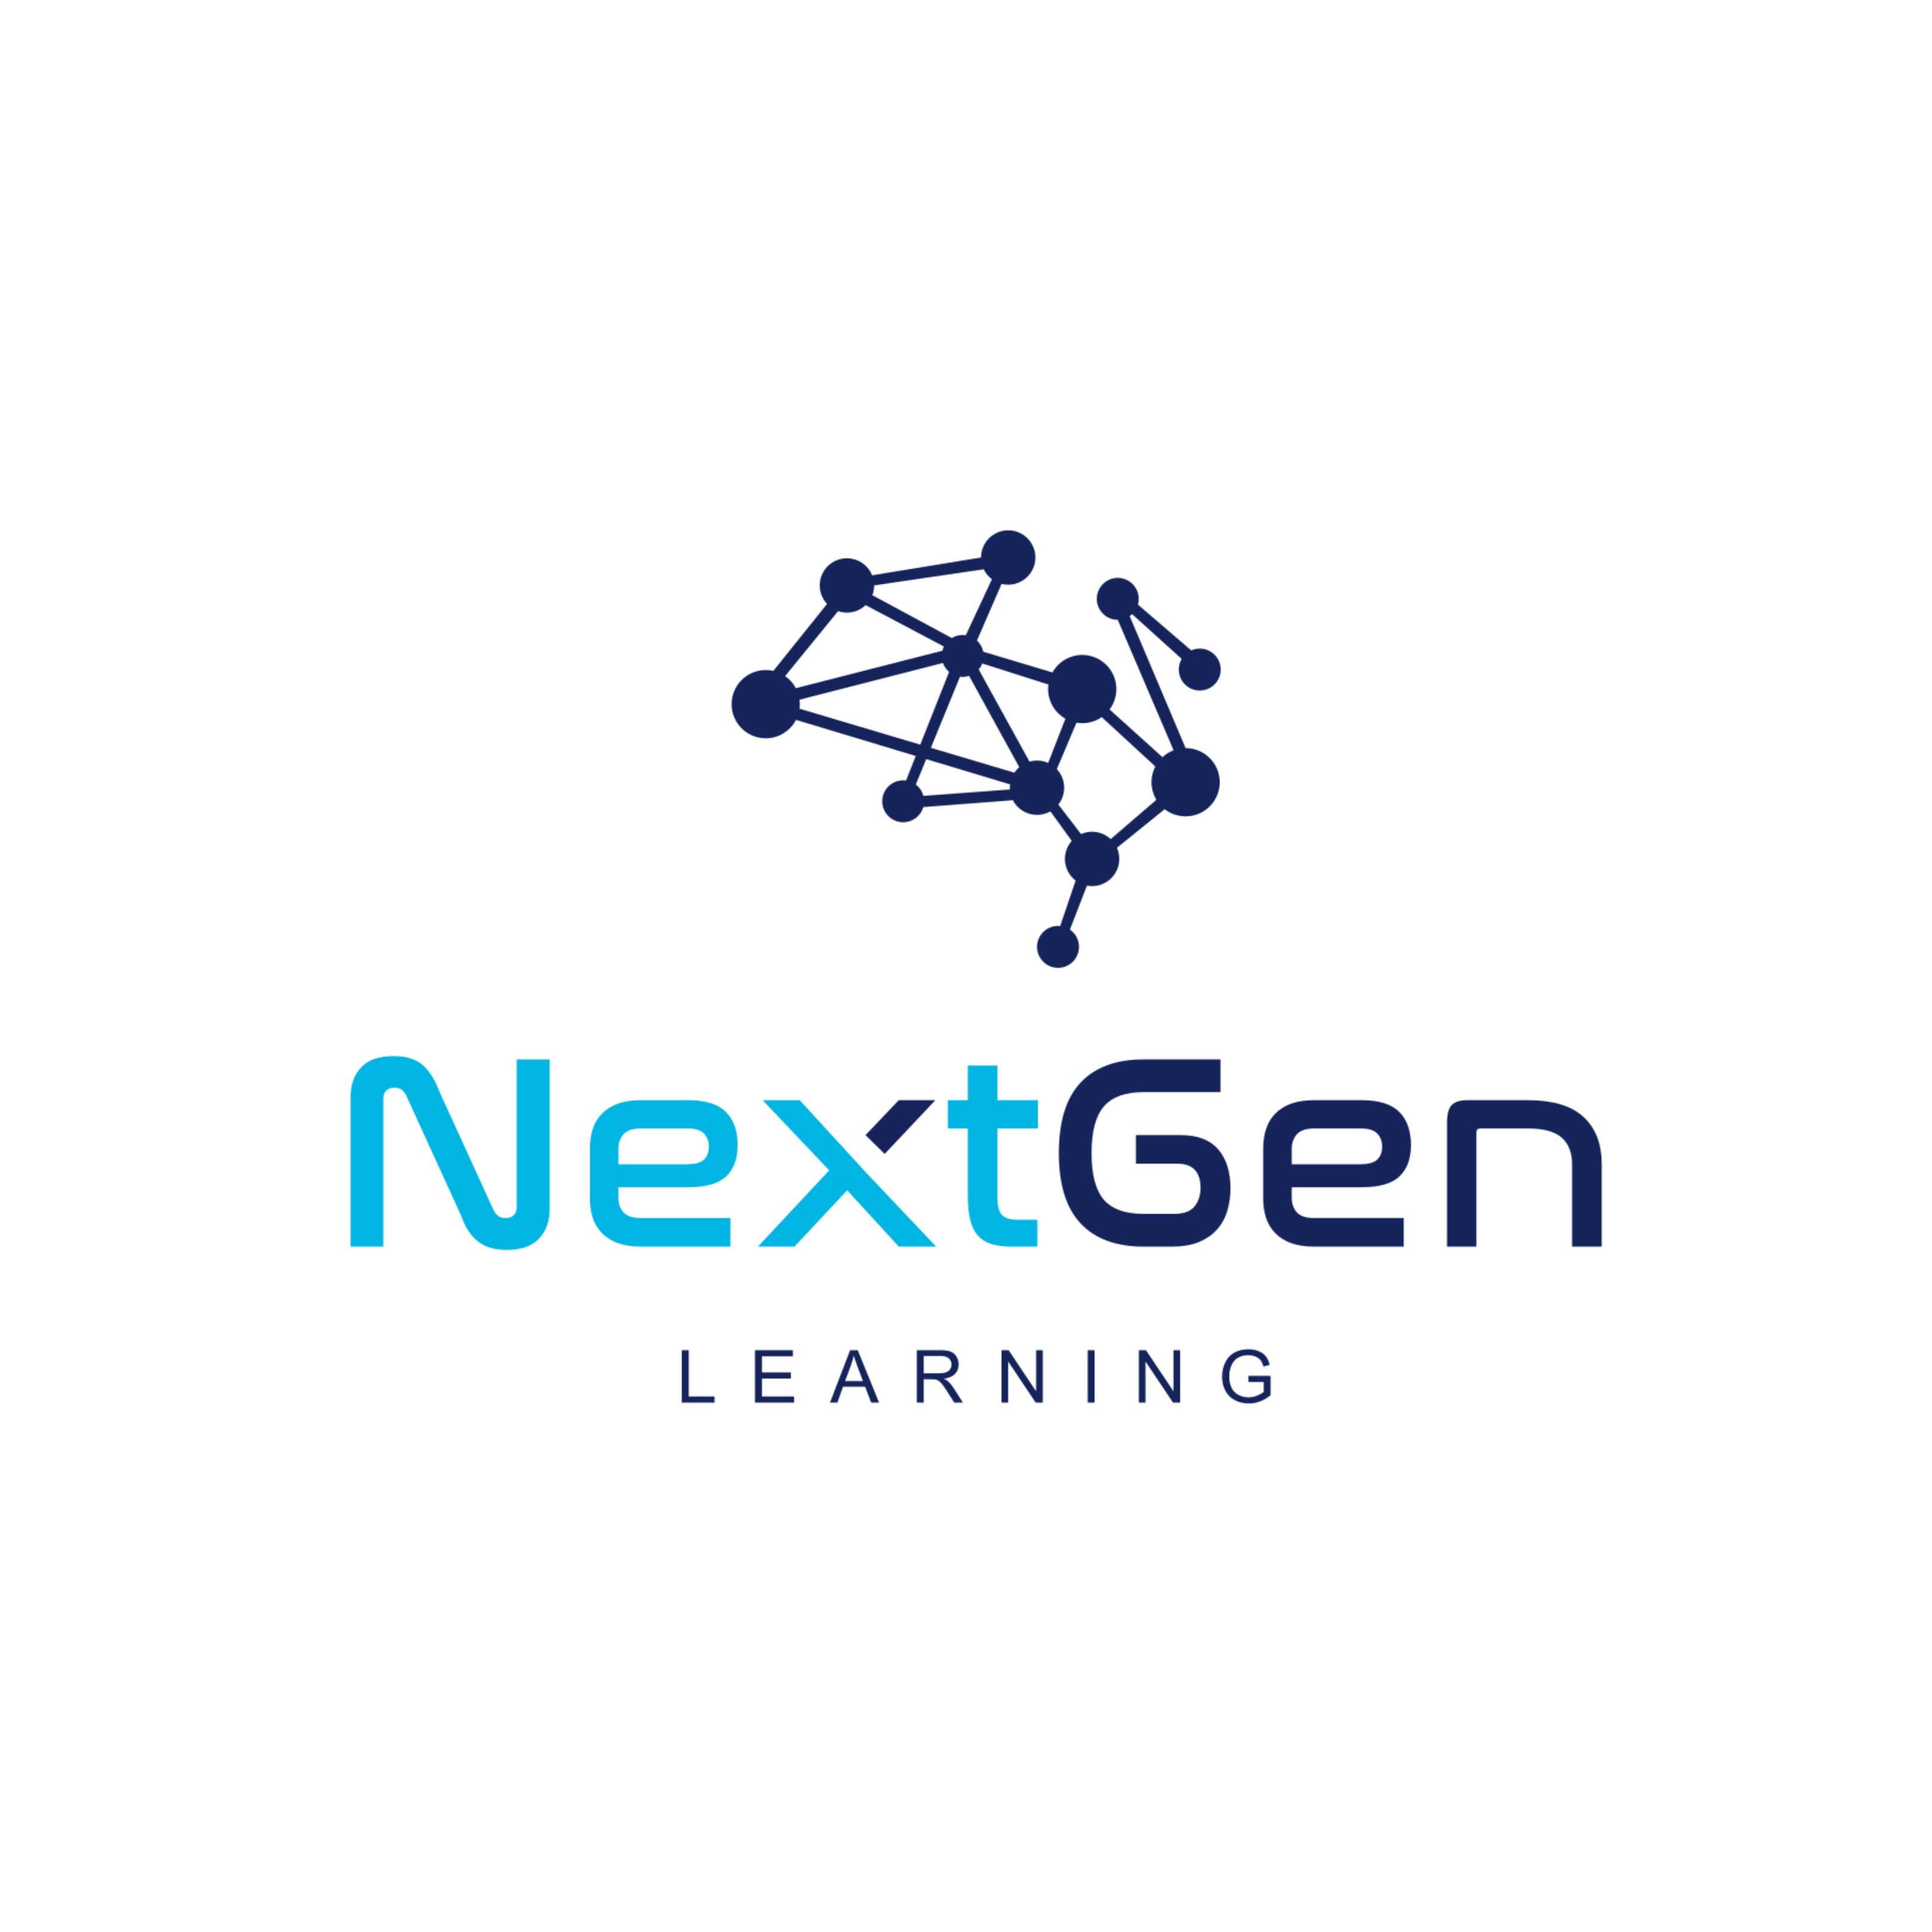 Nextgen Learning